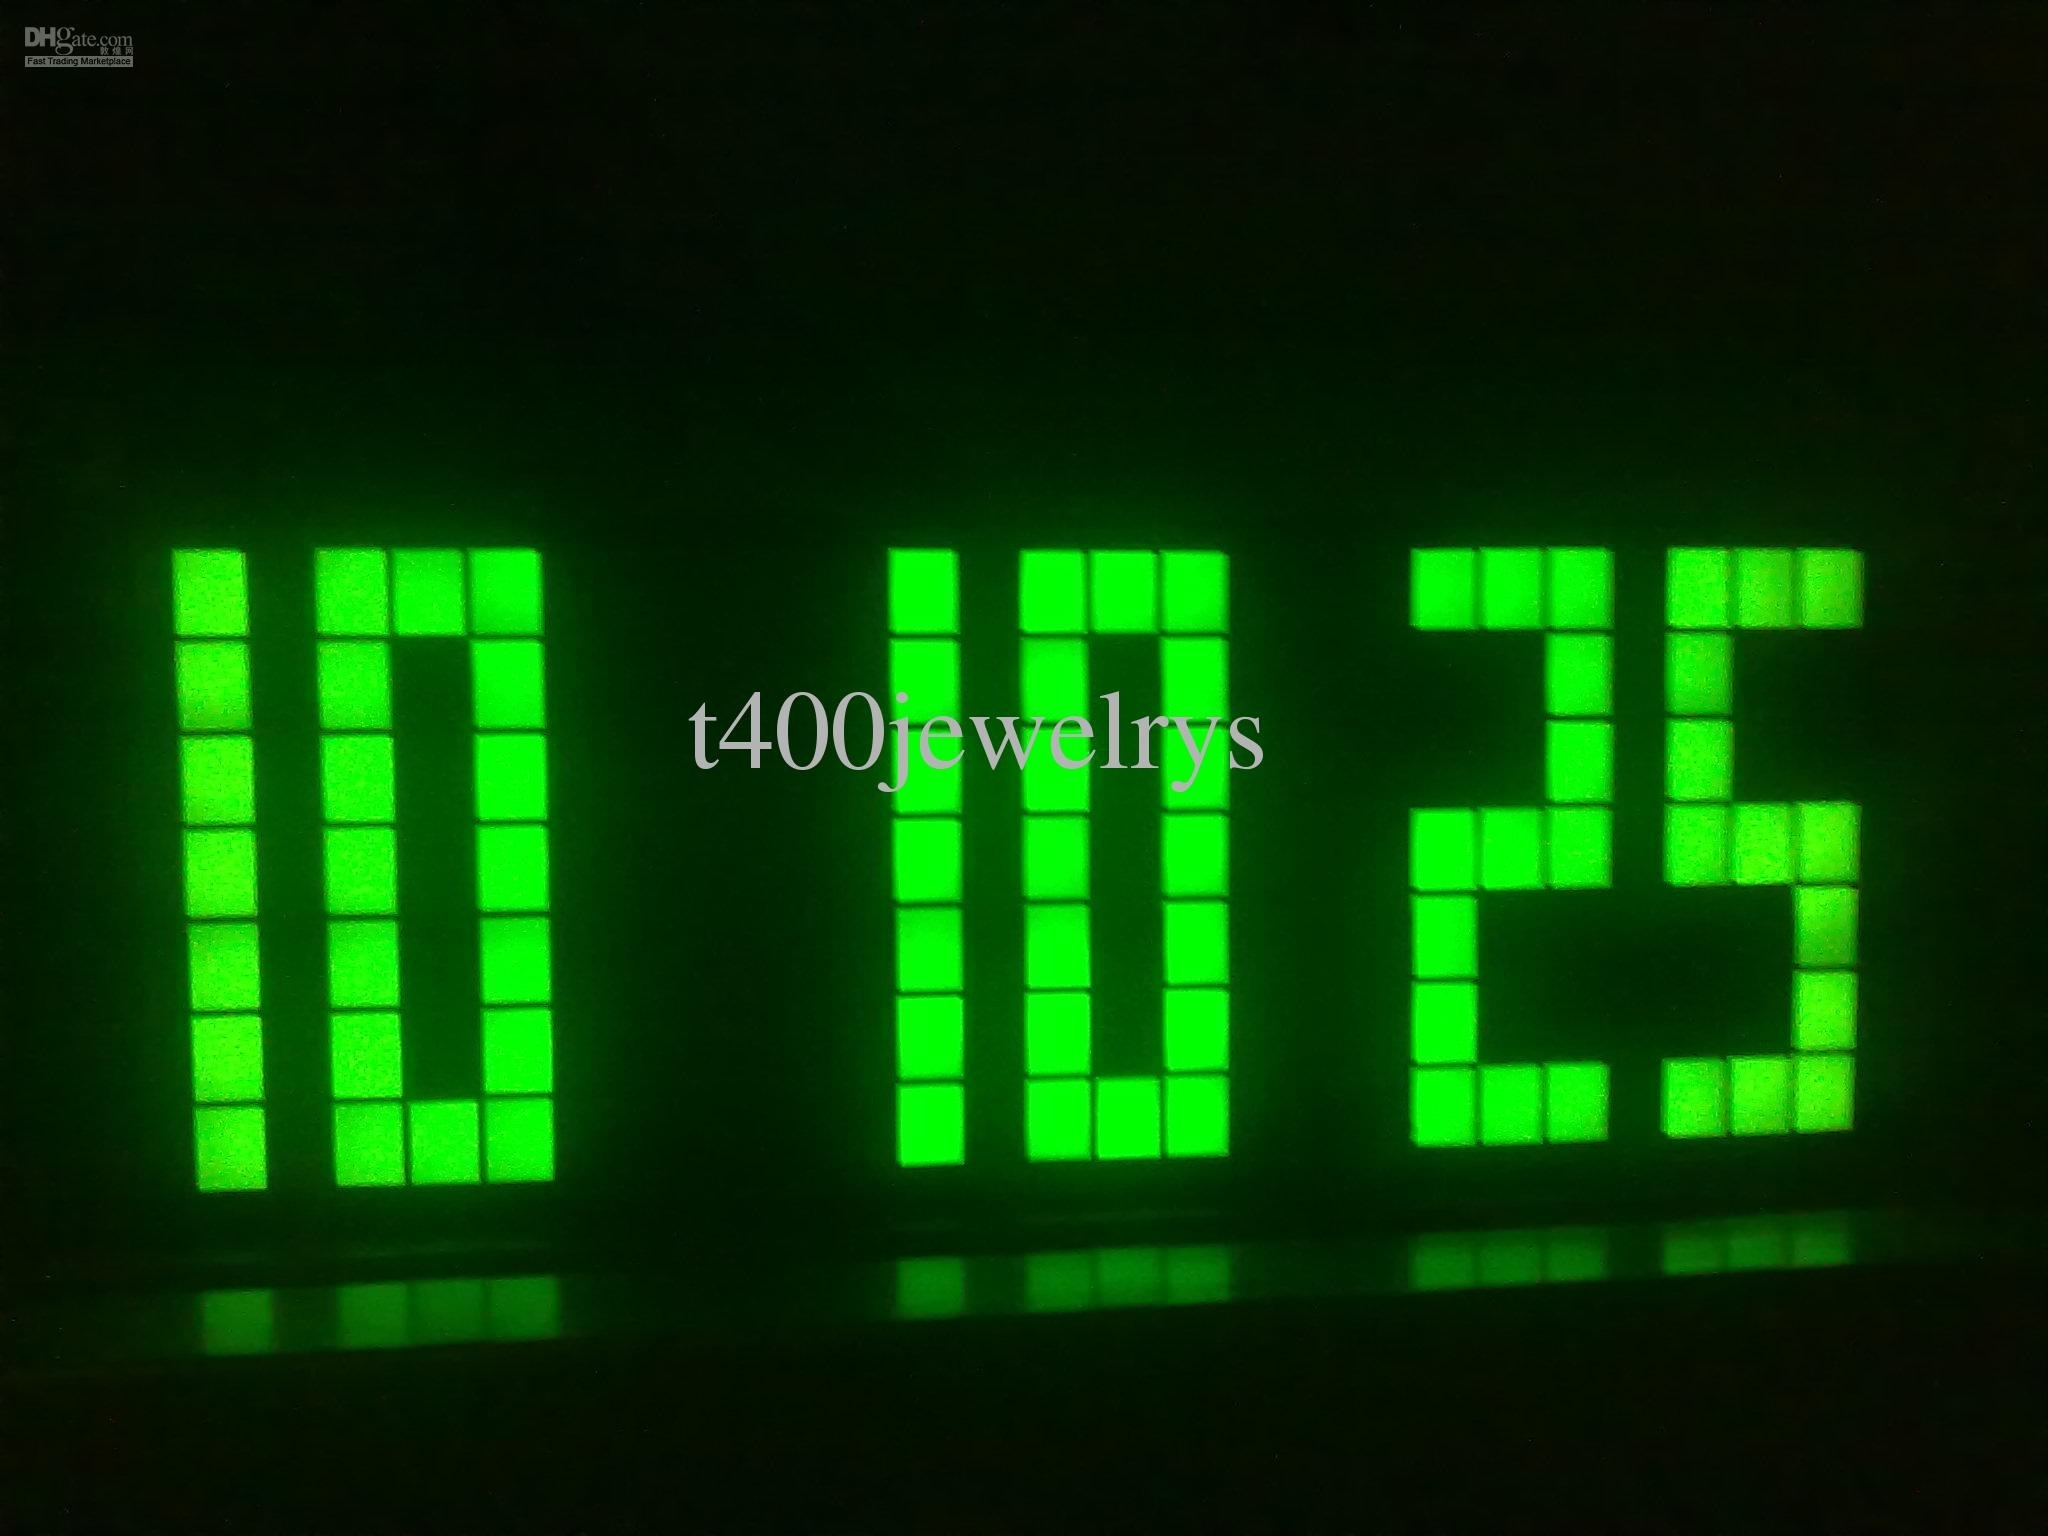 2048X1536Px Desktop Wallpaper Countdown Timer - Wallpapersafari Countdown Calendar To Retirement Desktop